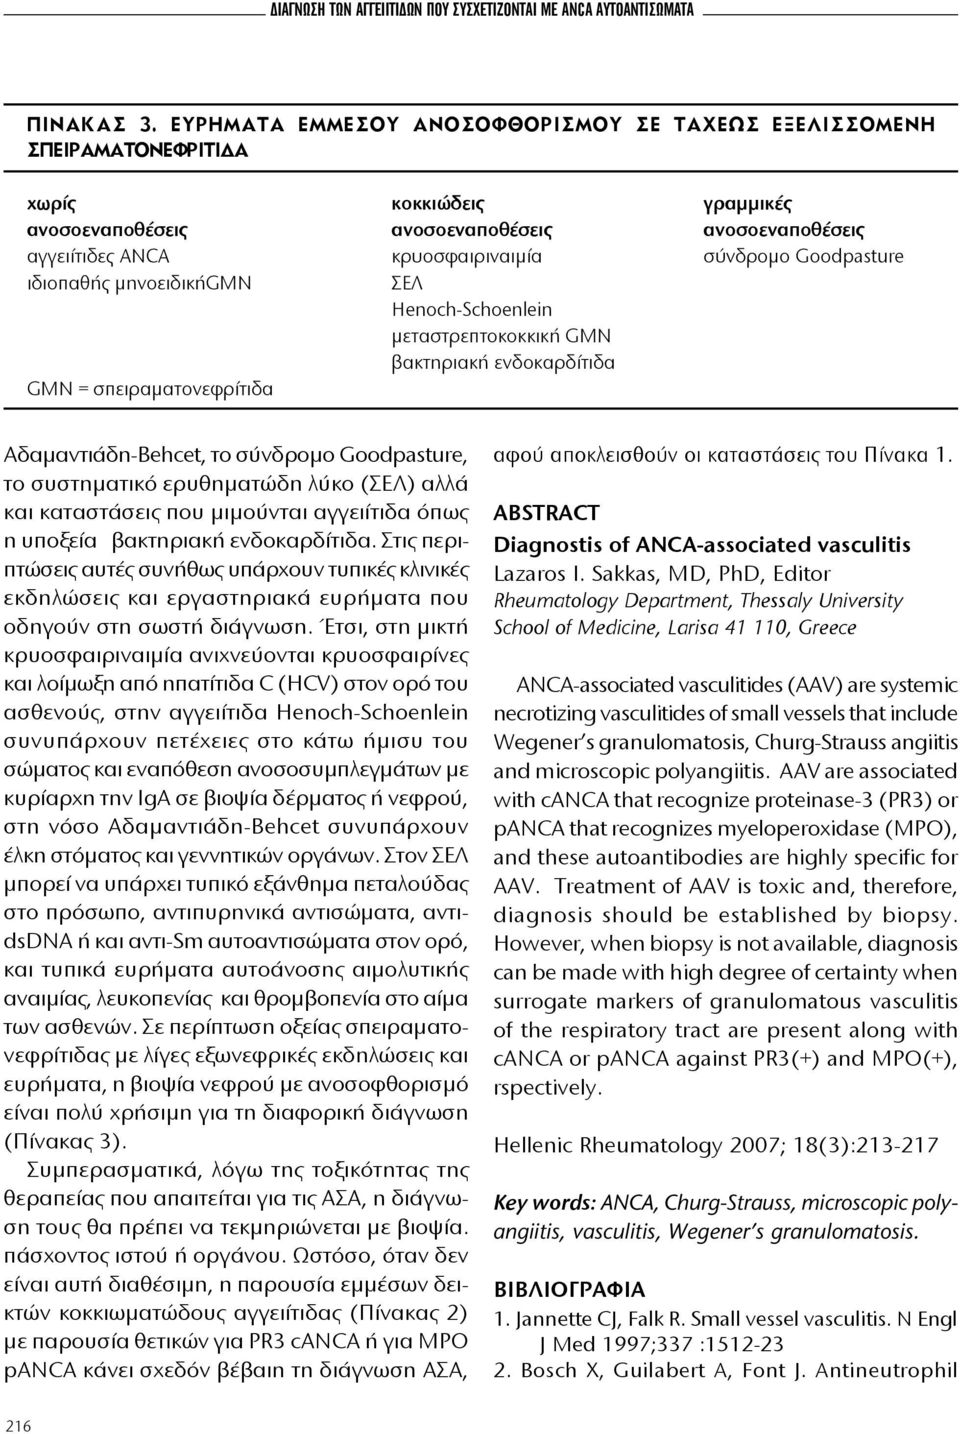 Goodpasture ιδιoπαθής μηνοειδικήgmn ΣΕΛ Henoch-Schoenlein μεταστρεπτοκοκκική GMN βακτηριακή ενδοκαρδίτιδα GMN = σπειραματονεφρίτιδα Αδαμαντιάδη-Behcet, το σύνδρομο Goodpasture, το συστηματικό